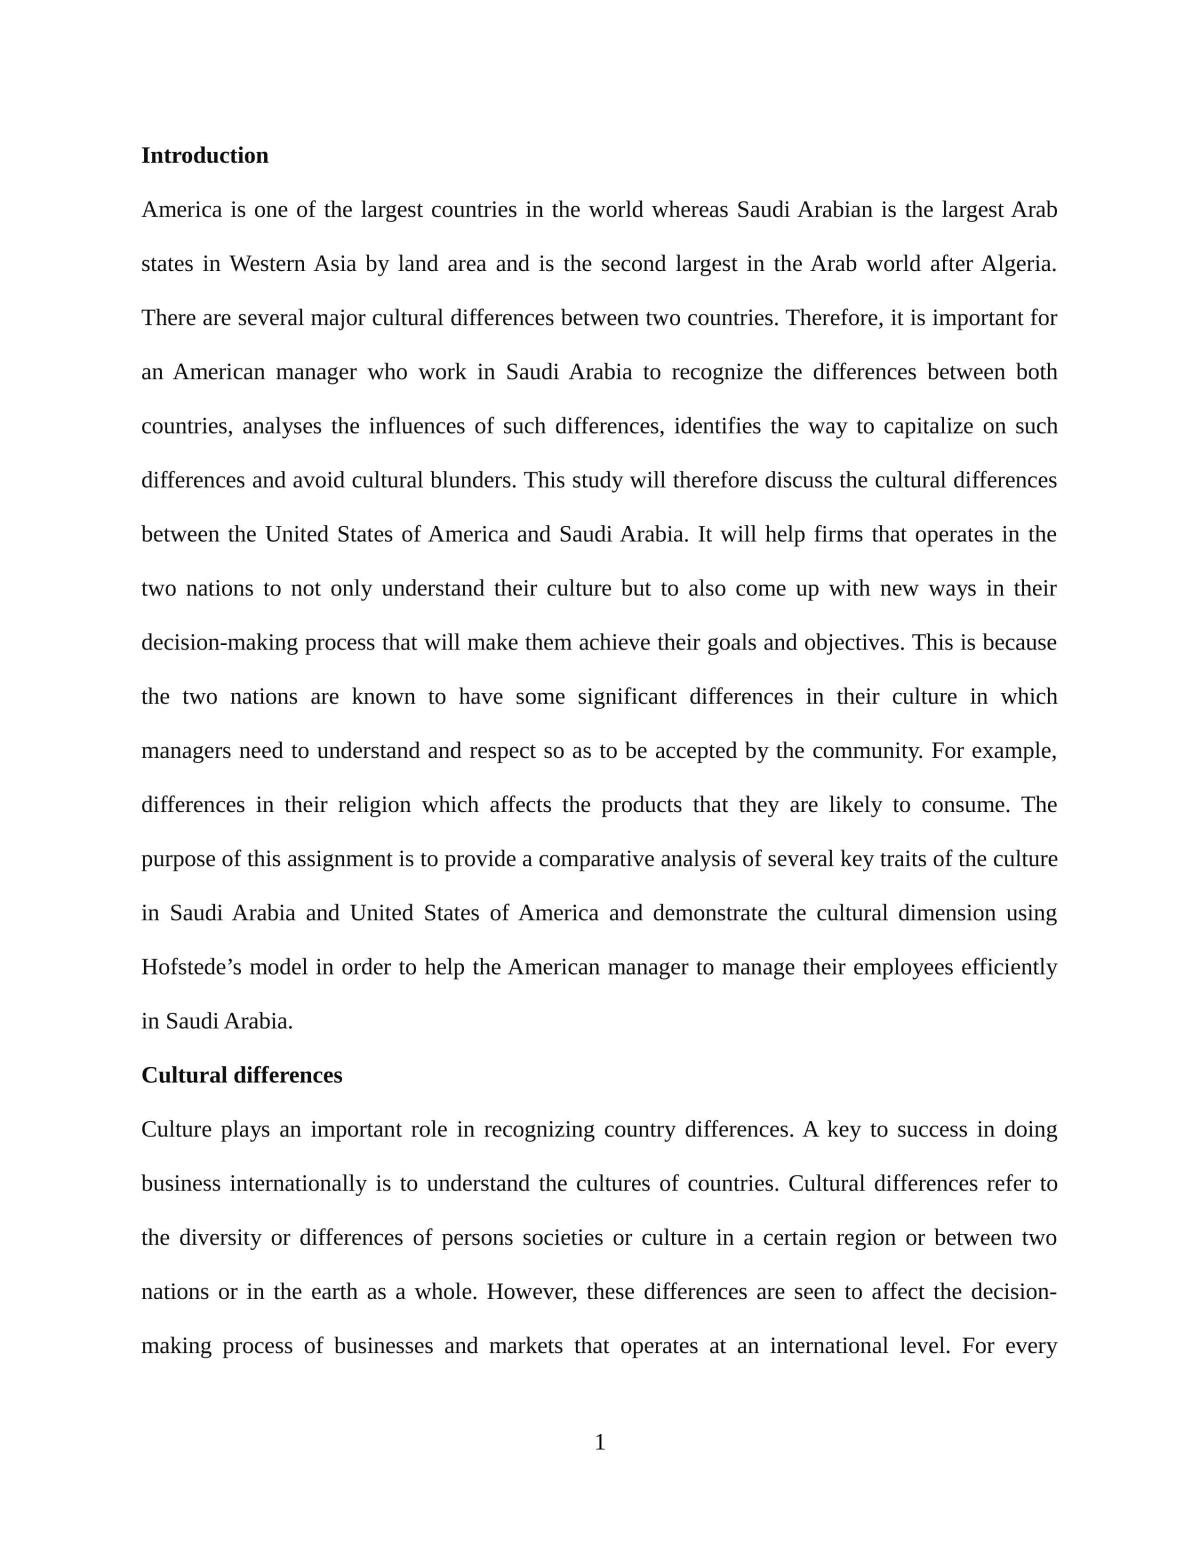 Individual Essay 2 - Page 1